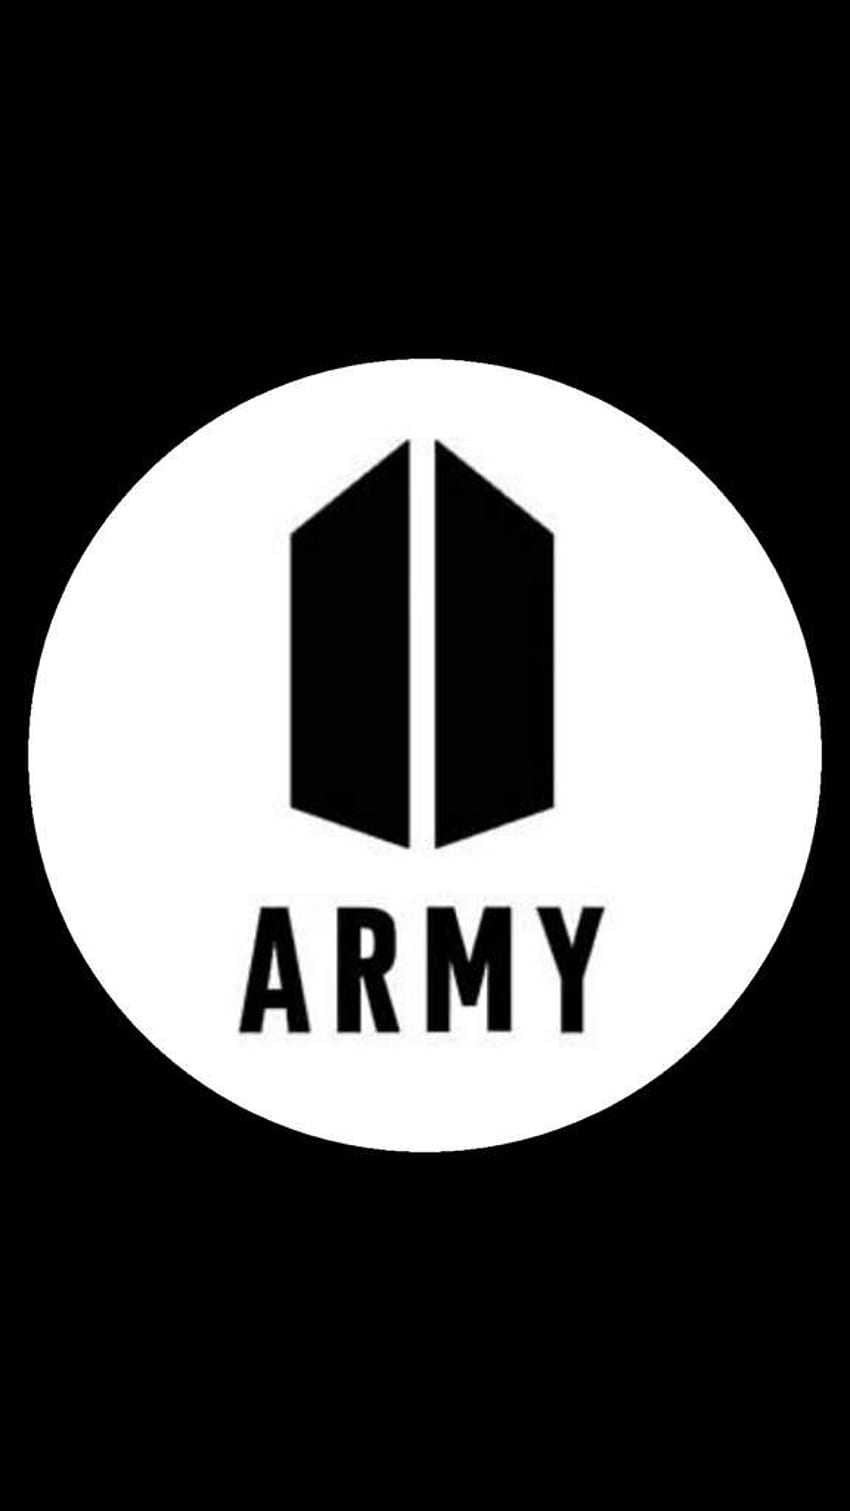 How to draw BTS Army Logo - YouTube